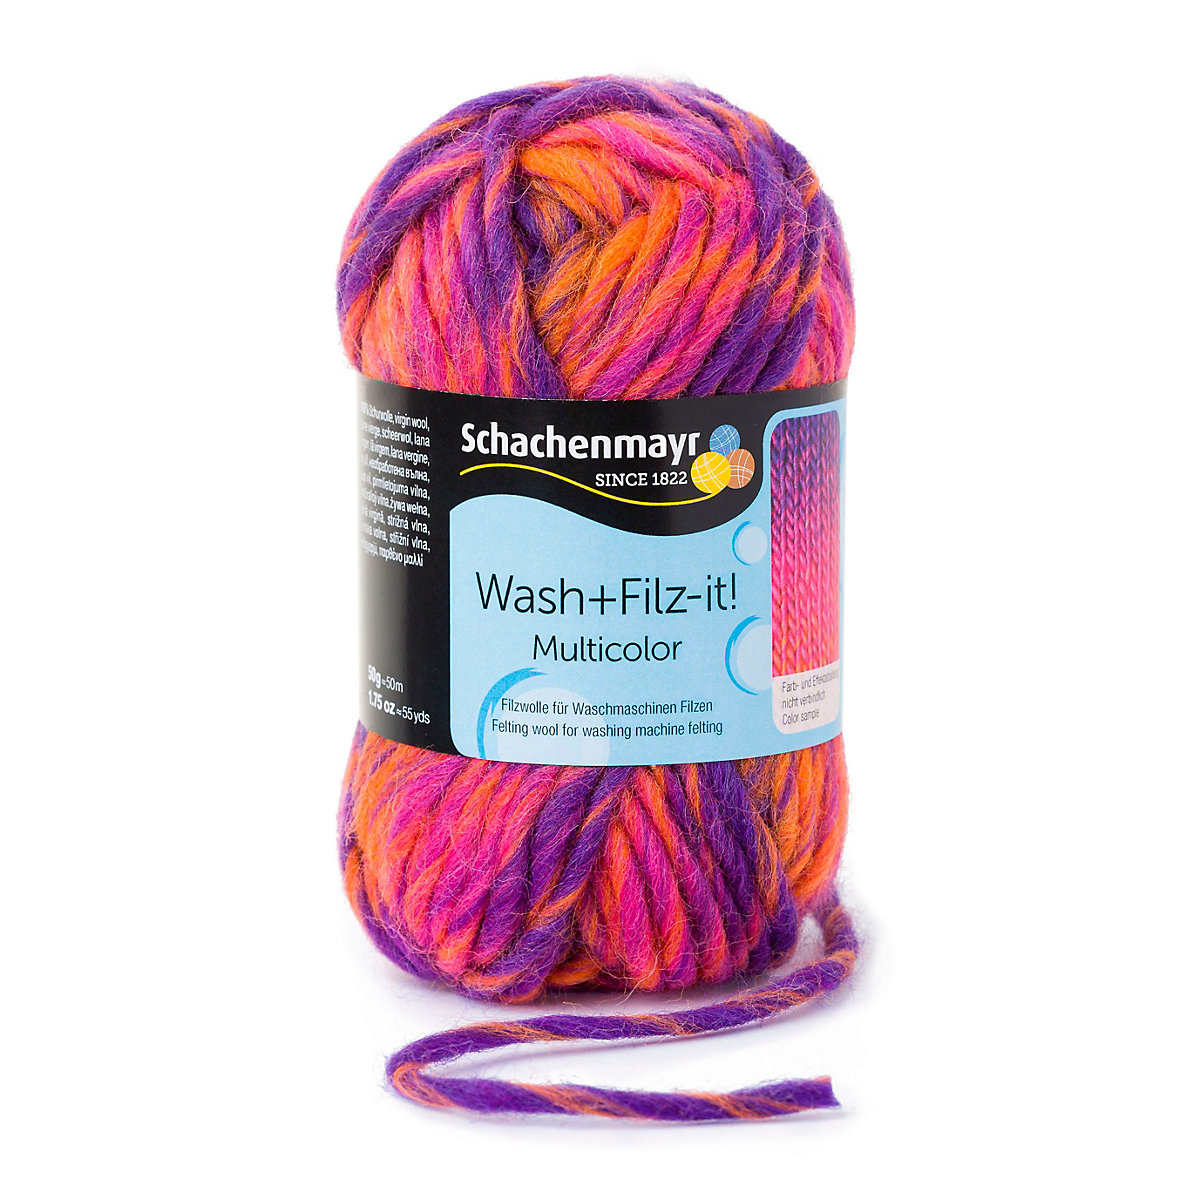 Schachenmayr Filzgarne Wash+Filz-it! Multicolor 50g pink-lilac